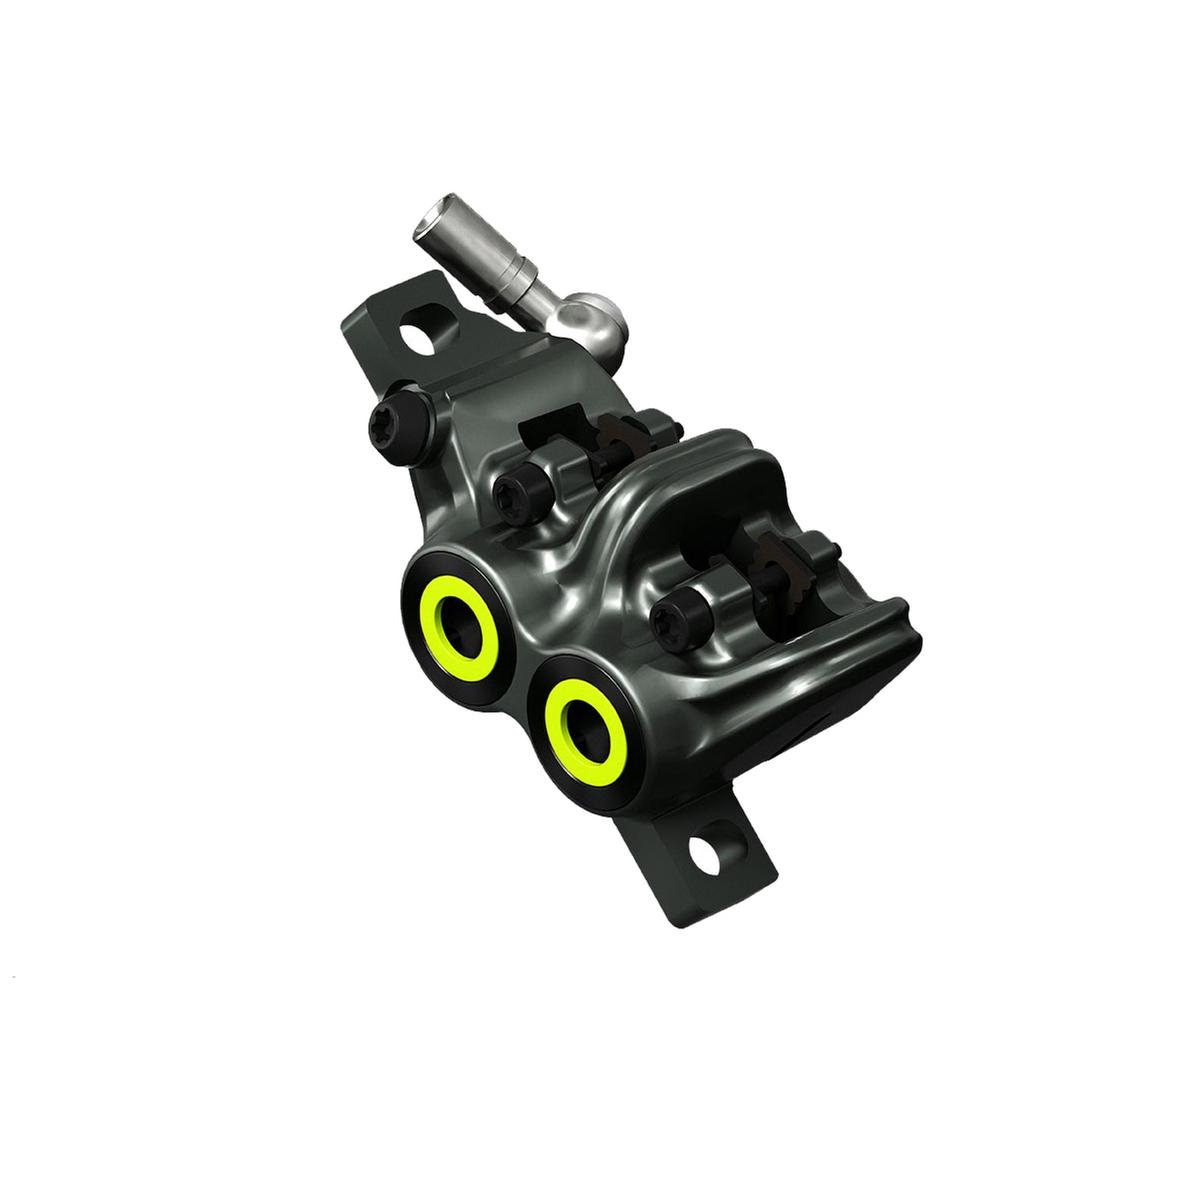 Brake Caliper MT7 4 Pistons Rotatable Tube Connection 2015 + Brake Pads